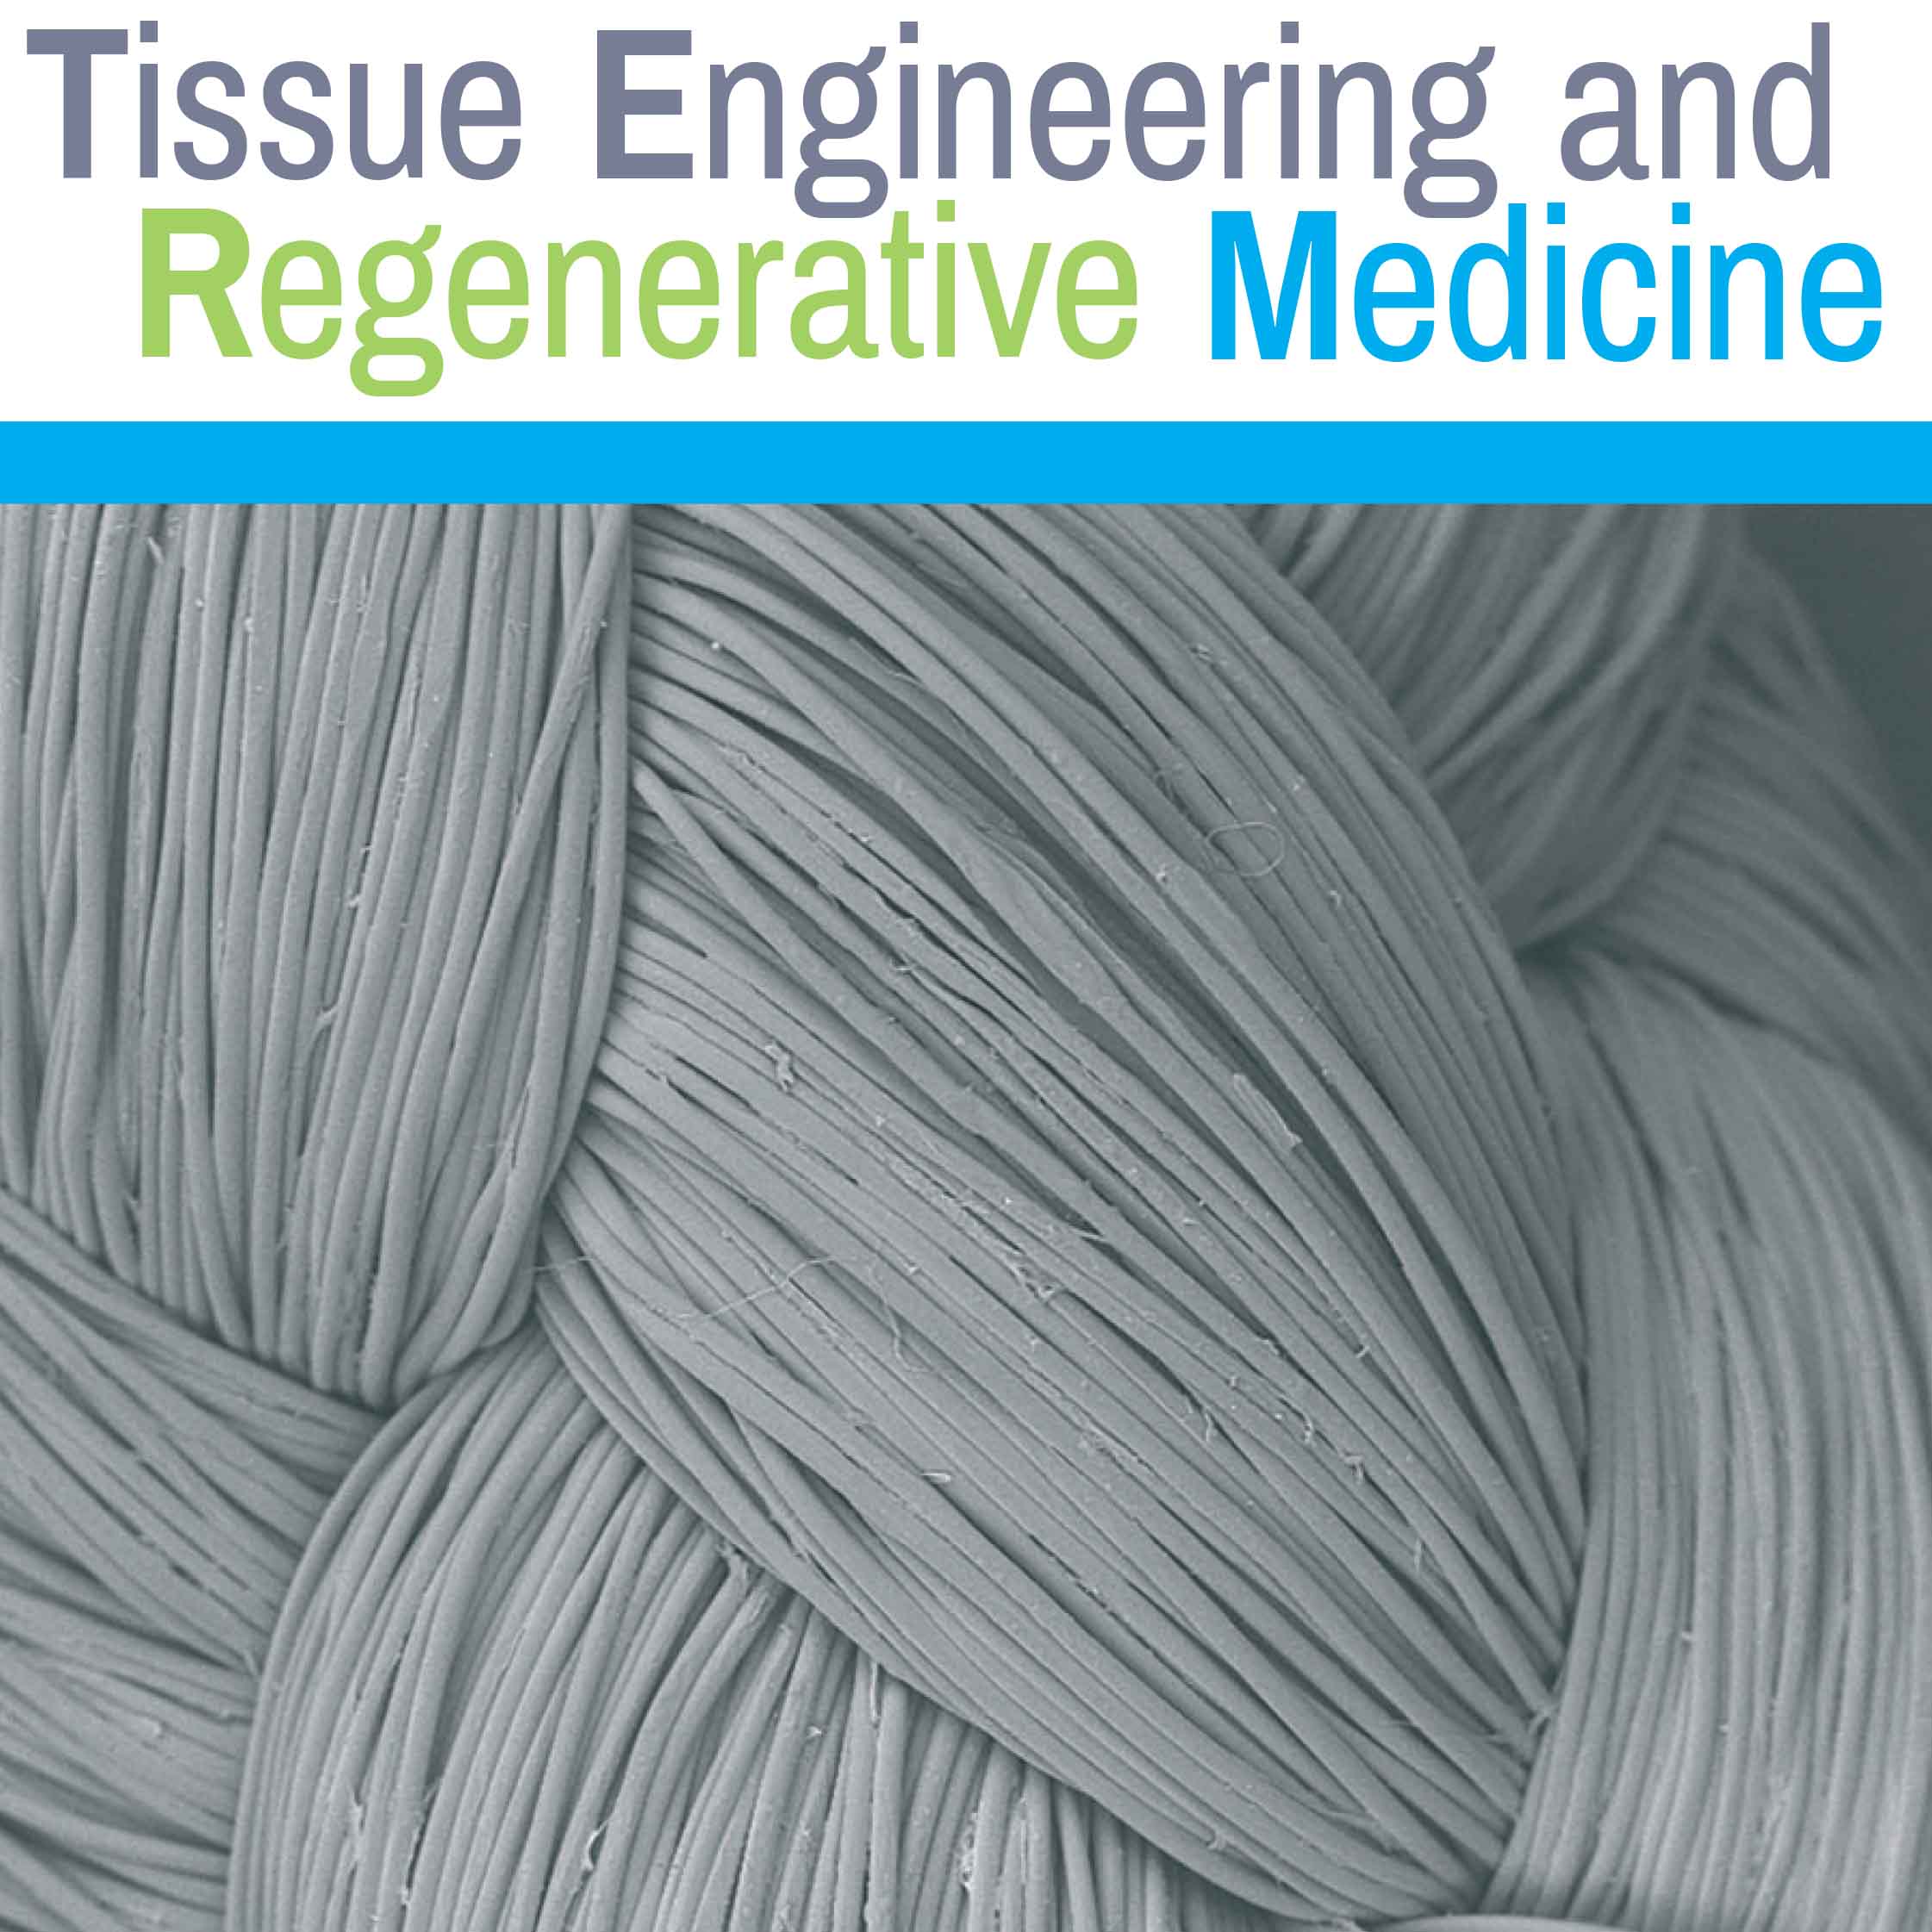 Eunji Chung, Journal of Tissue Engineering and Regenerative Medicine, 2017 Cover